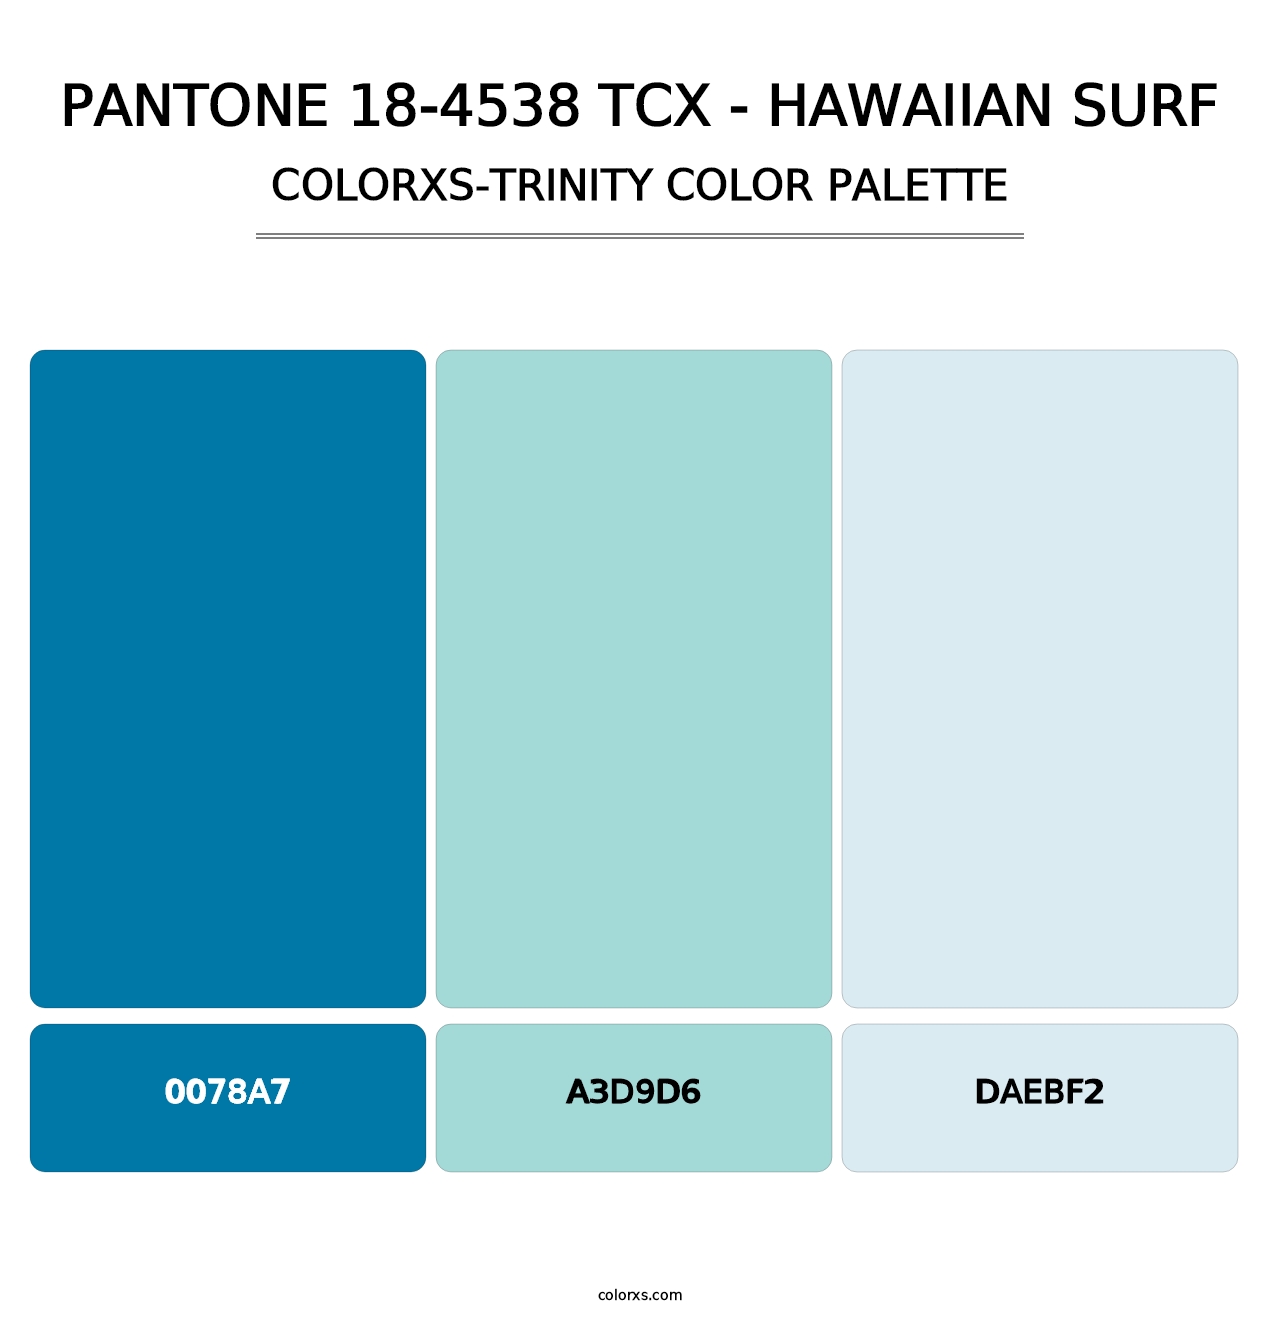 PANTONE 18-4538 TCX - Hawaiian Surf - Colorxs Trinity Palette